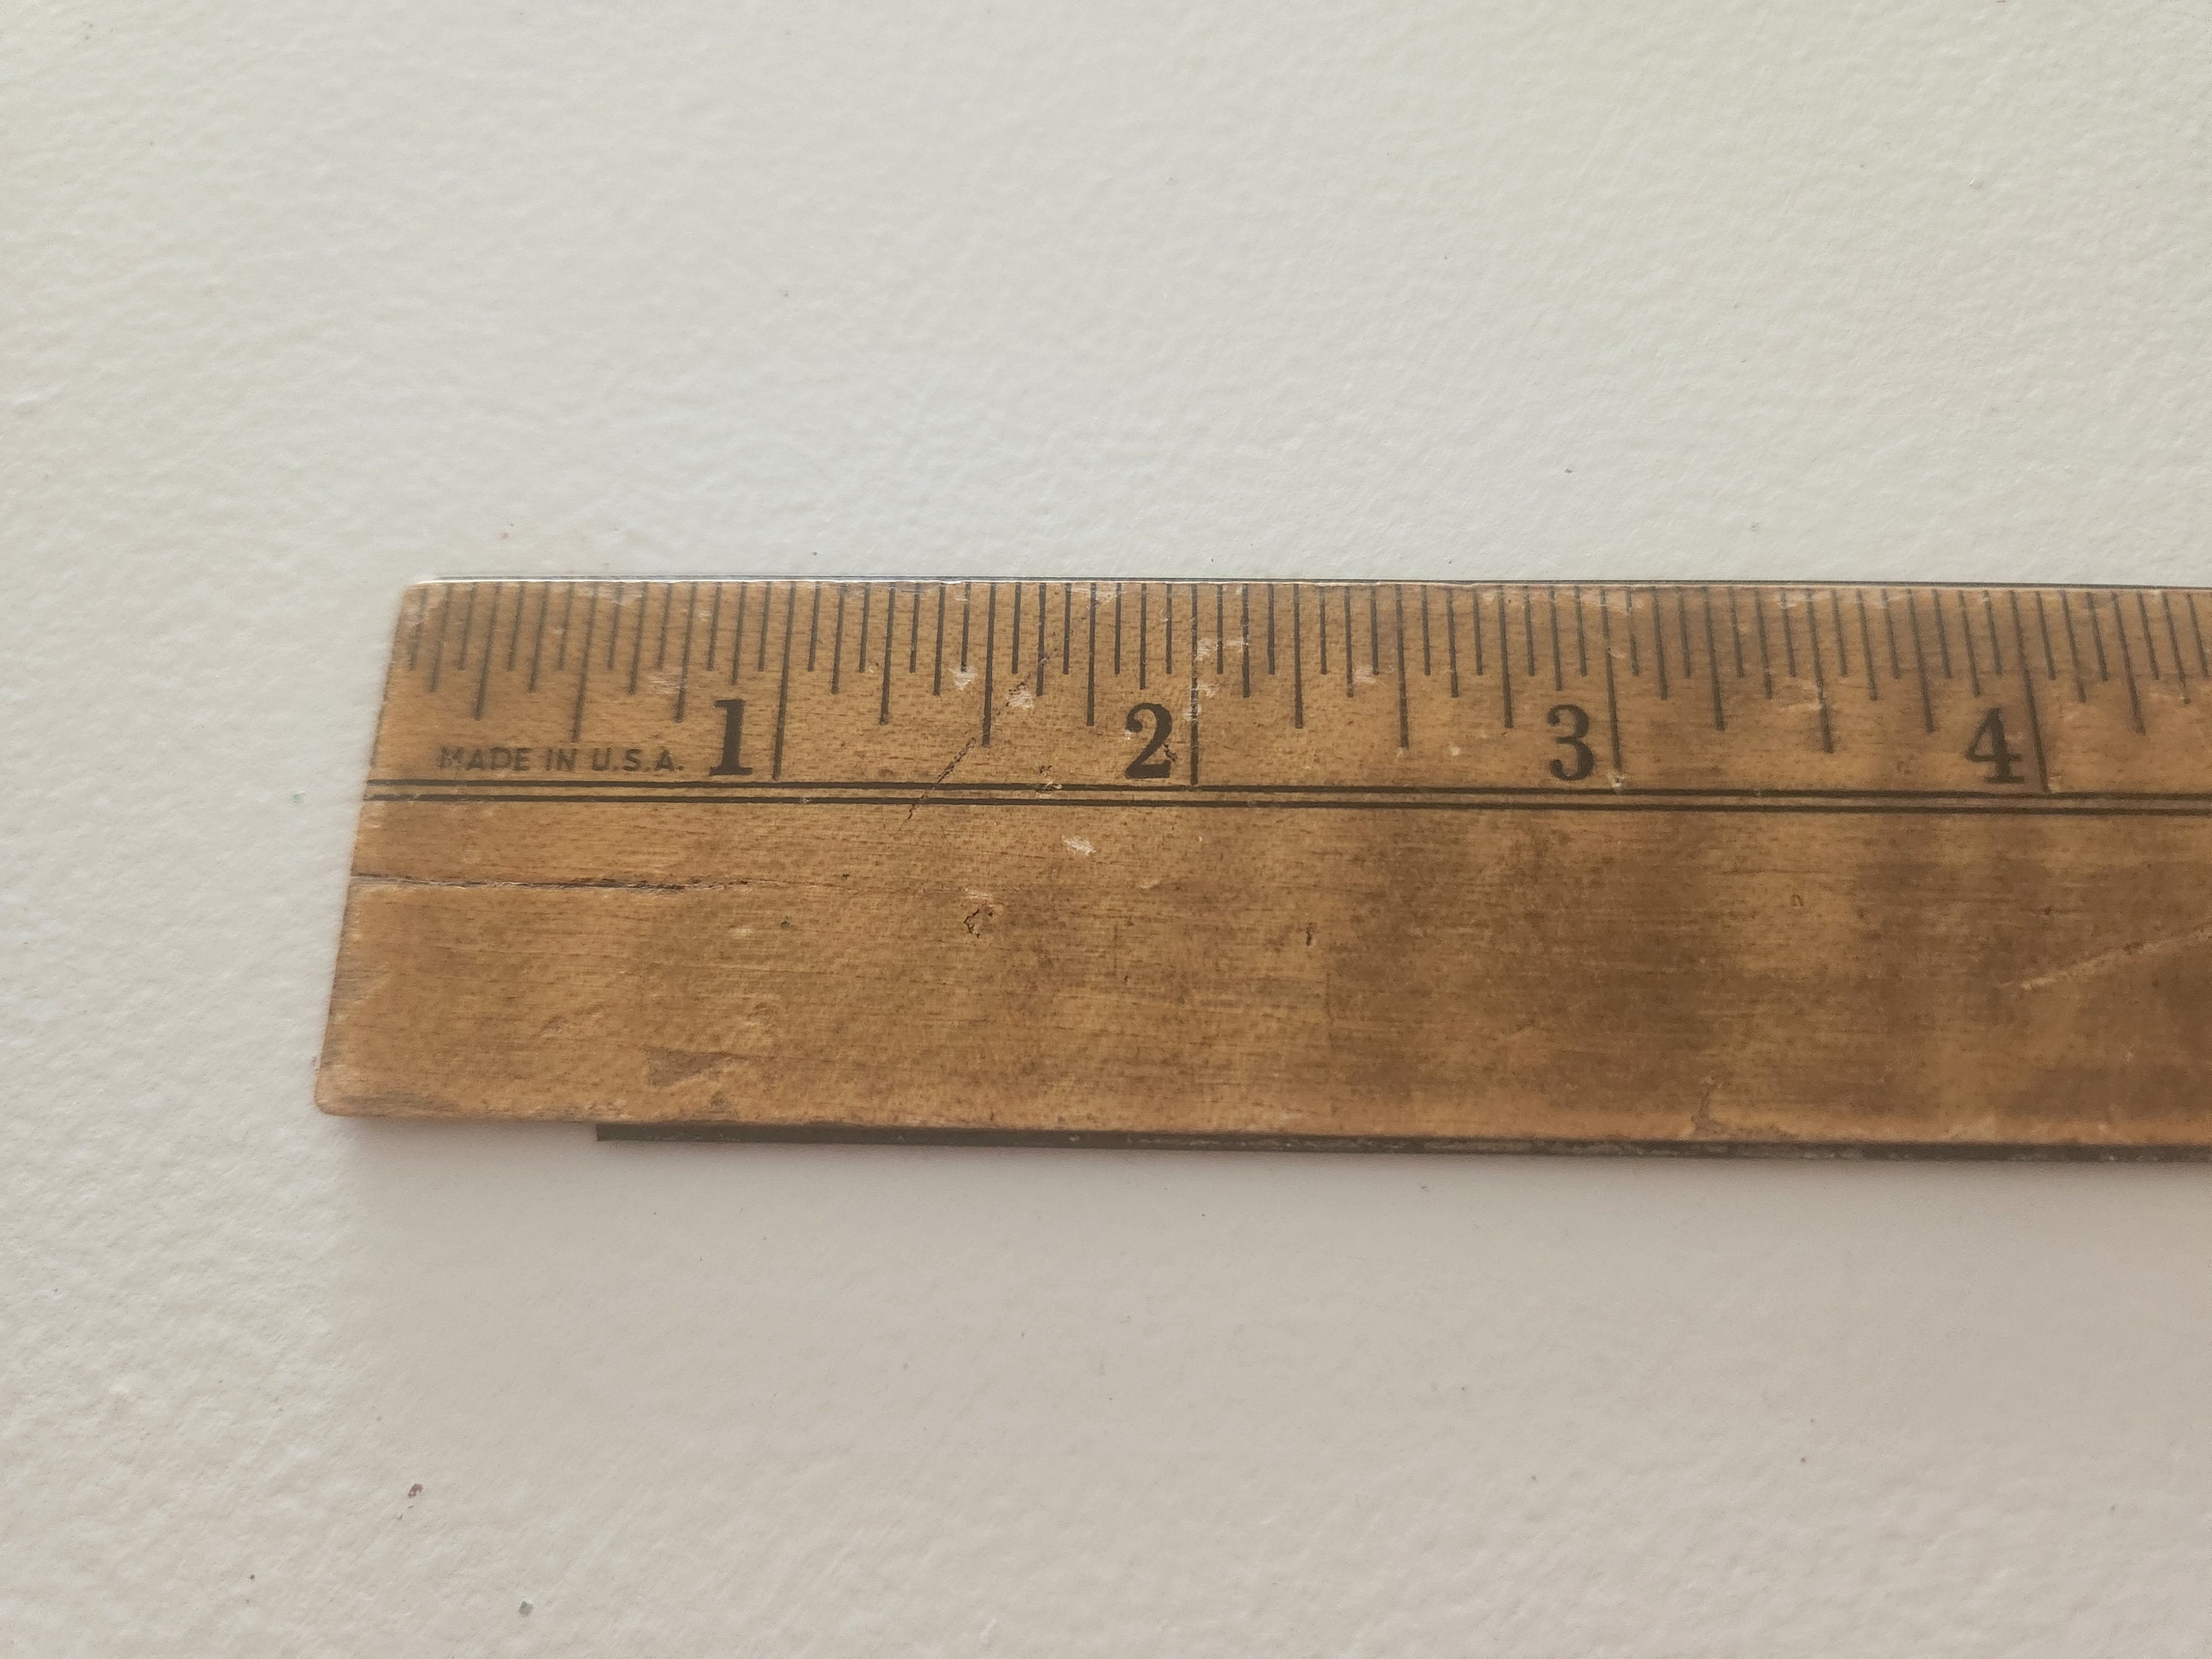 Vintage Westcott 15” Wood Ruler With Metal Straight Edge USA R-501-15